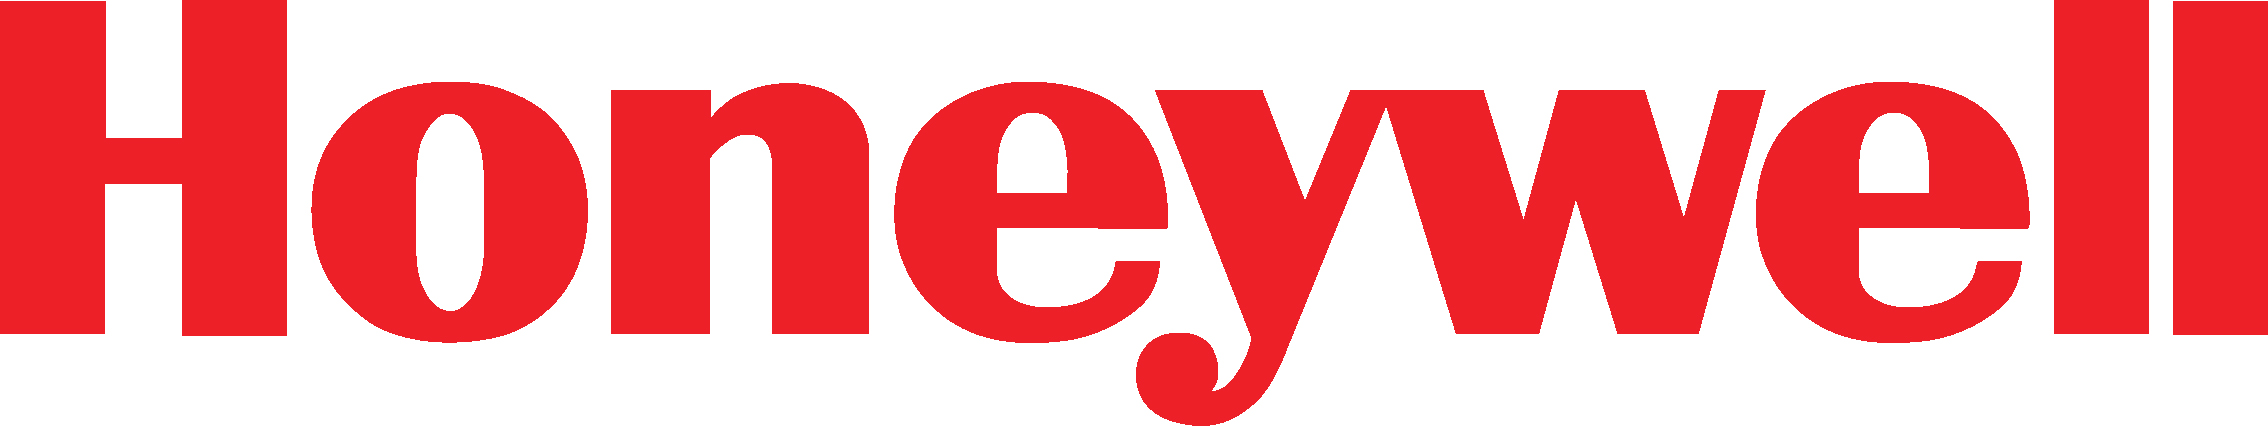 Honeywell Logo Red